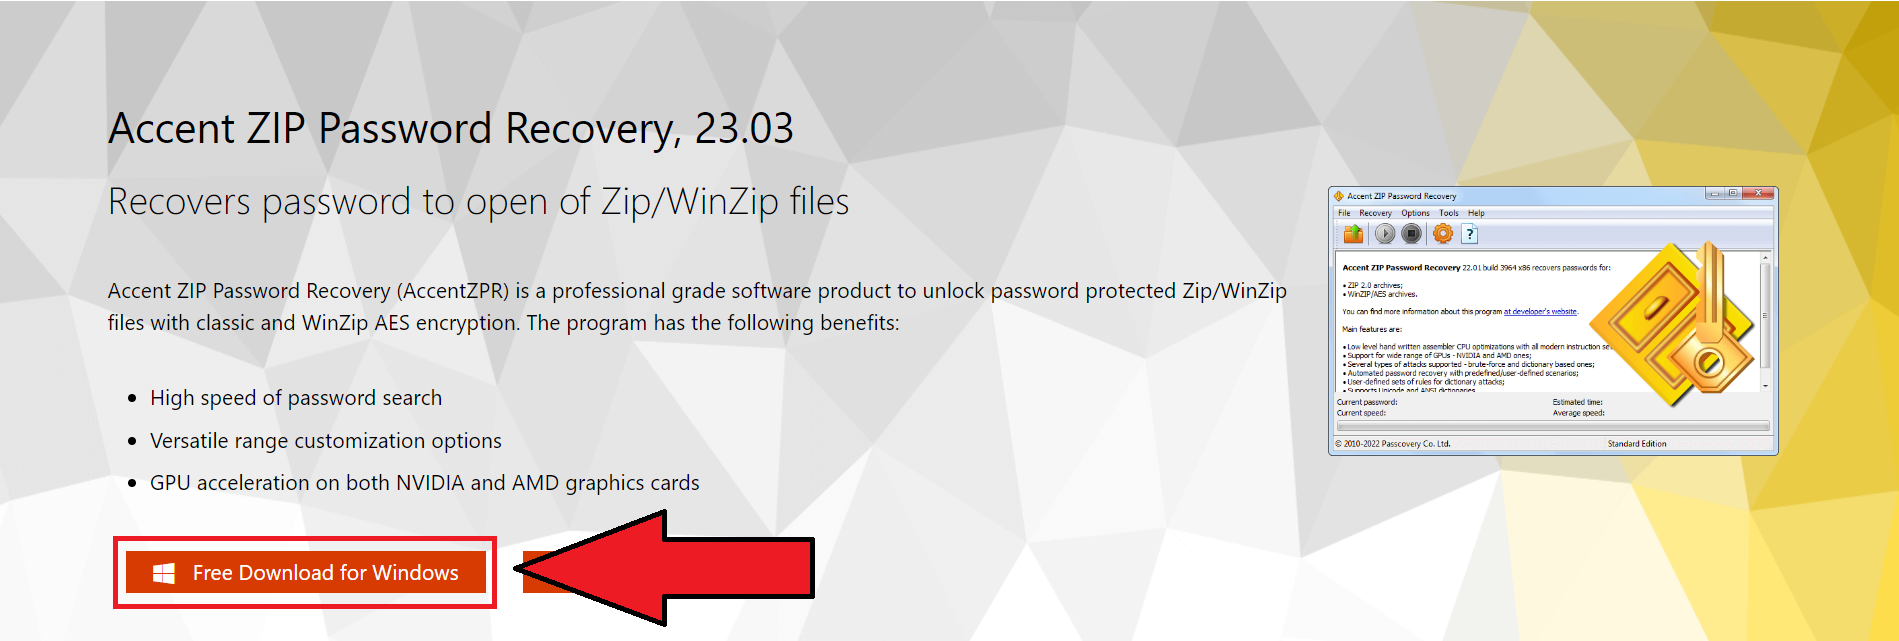 How to Unlock WinZIP Password Using Accent ZIP Password Recovery: Step 1